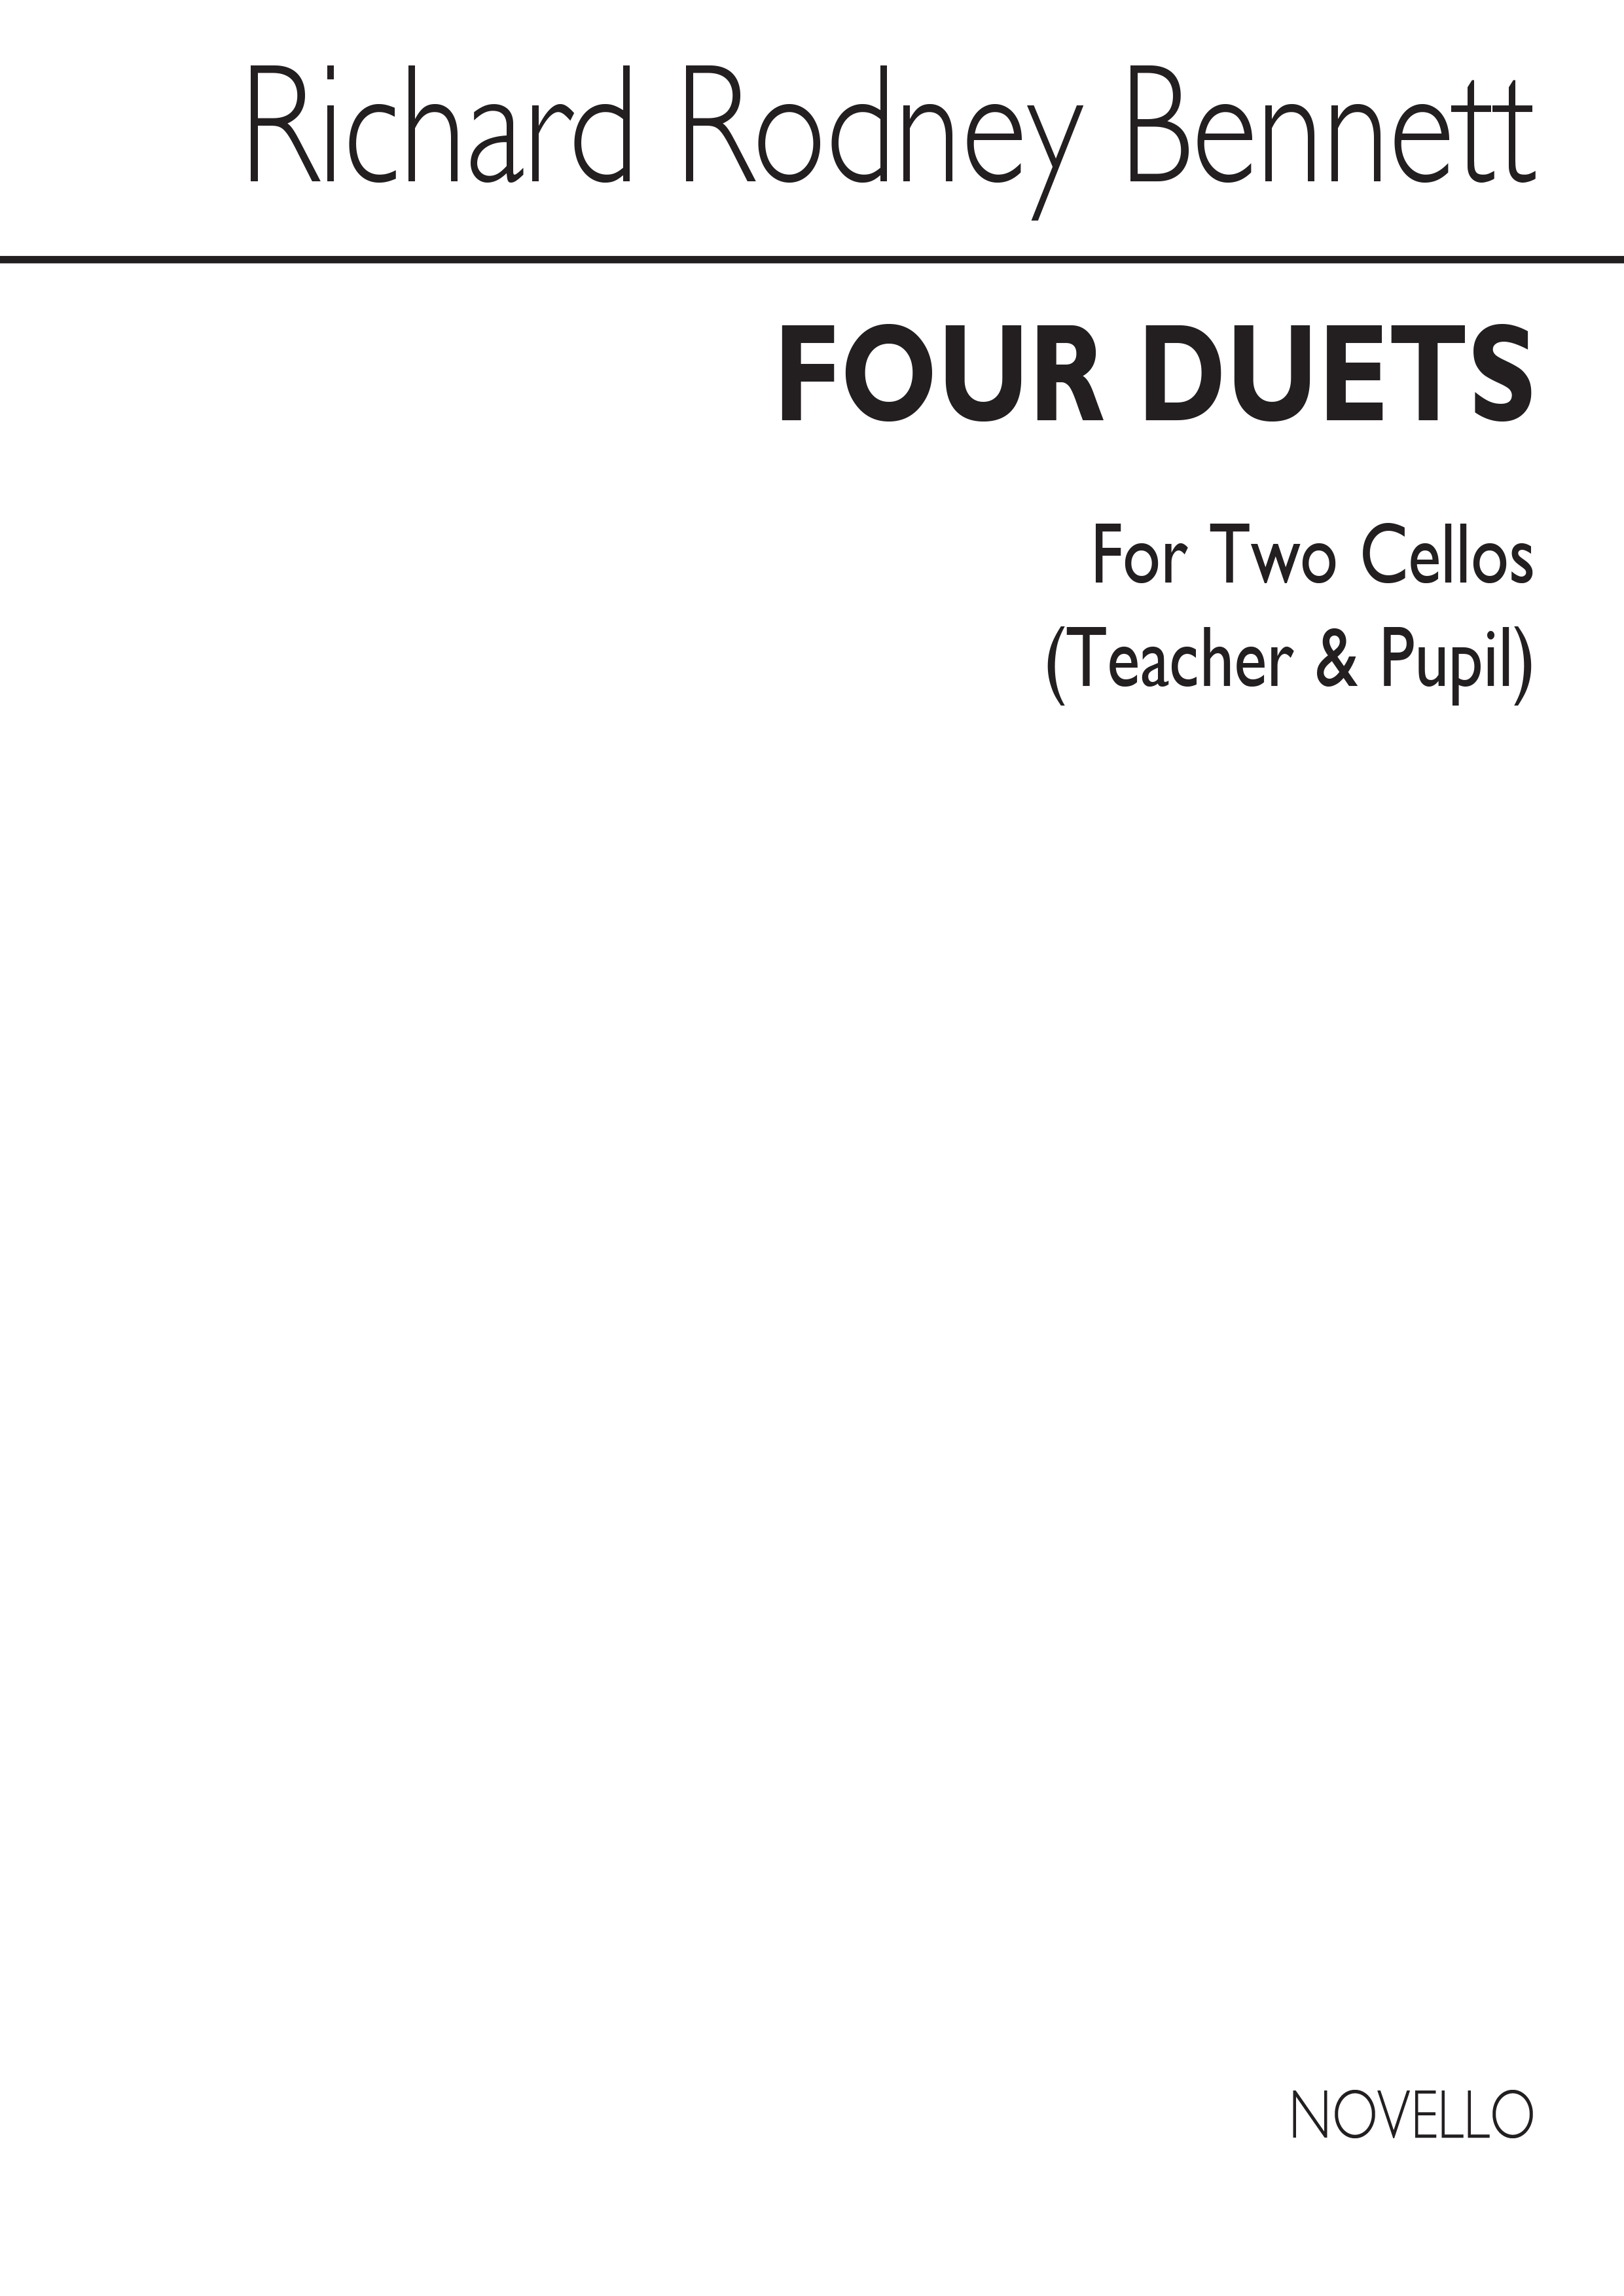 Richard Rodney Bennett: Four Duets For Two Cellos - Parts: Cello Duet: Parts